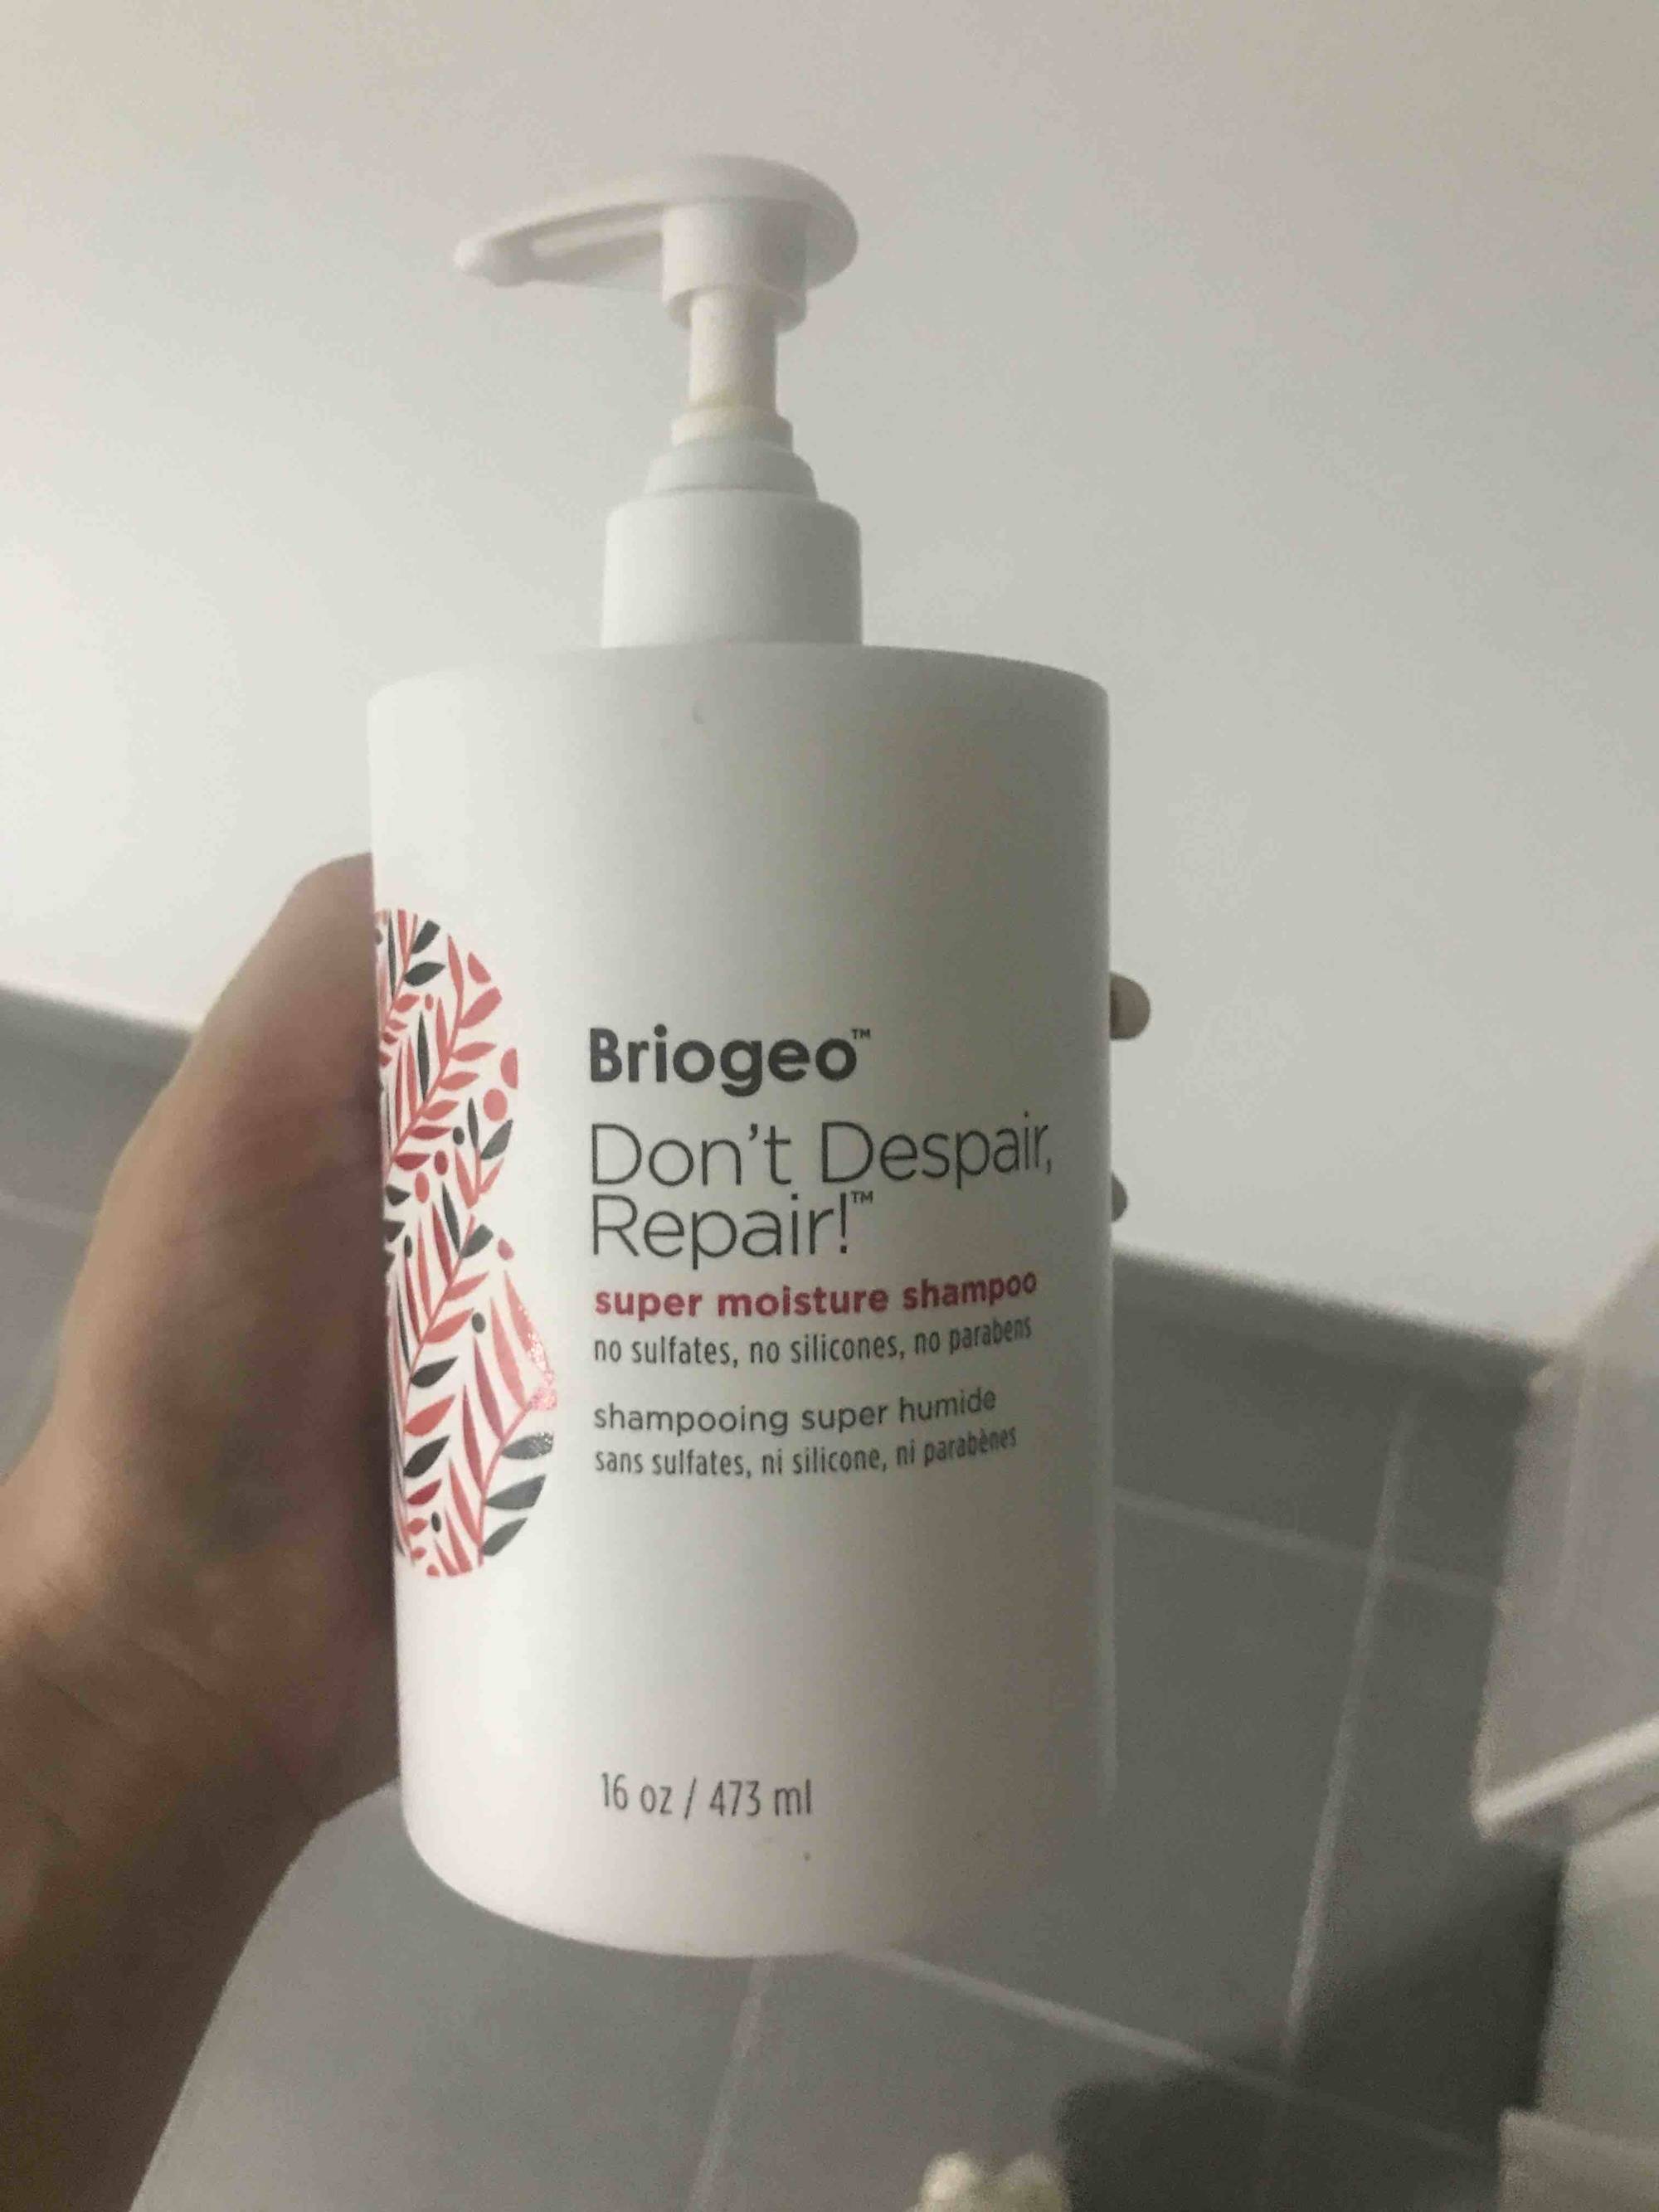 BRIOGEO - Don't despair repair! - Shampooing super humide